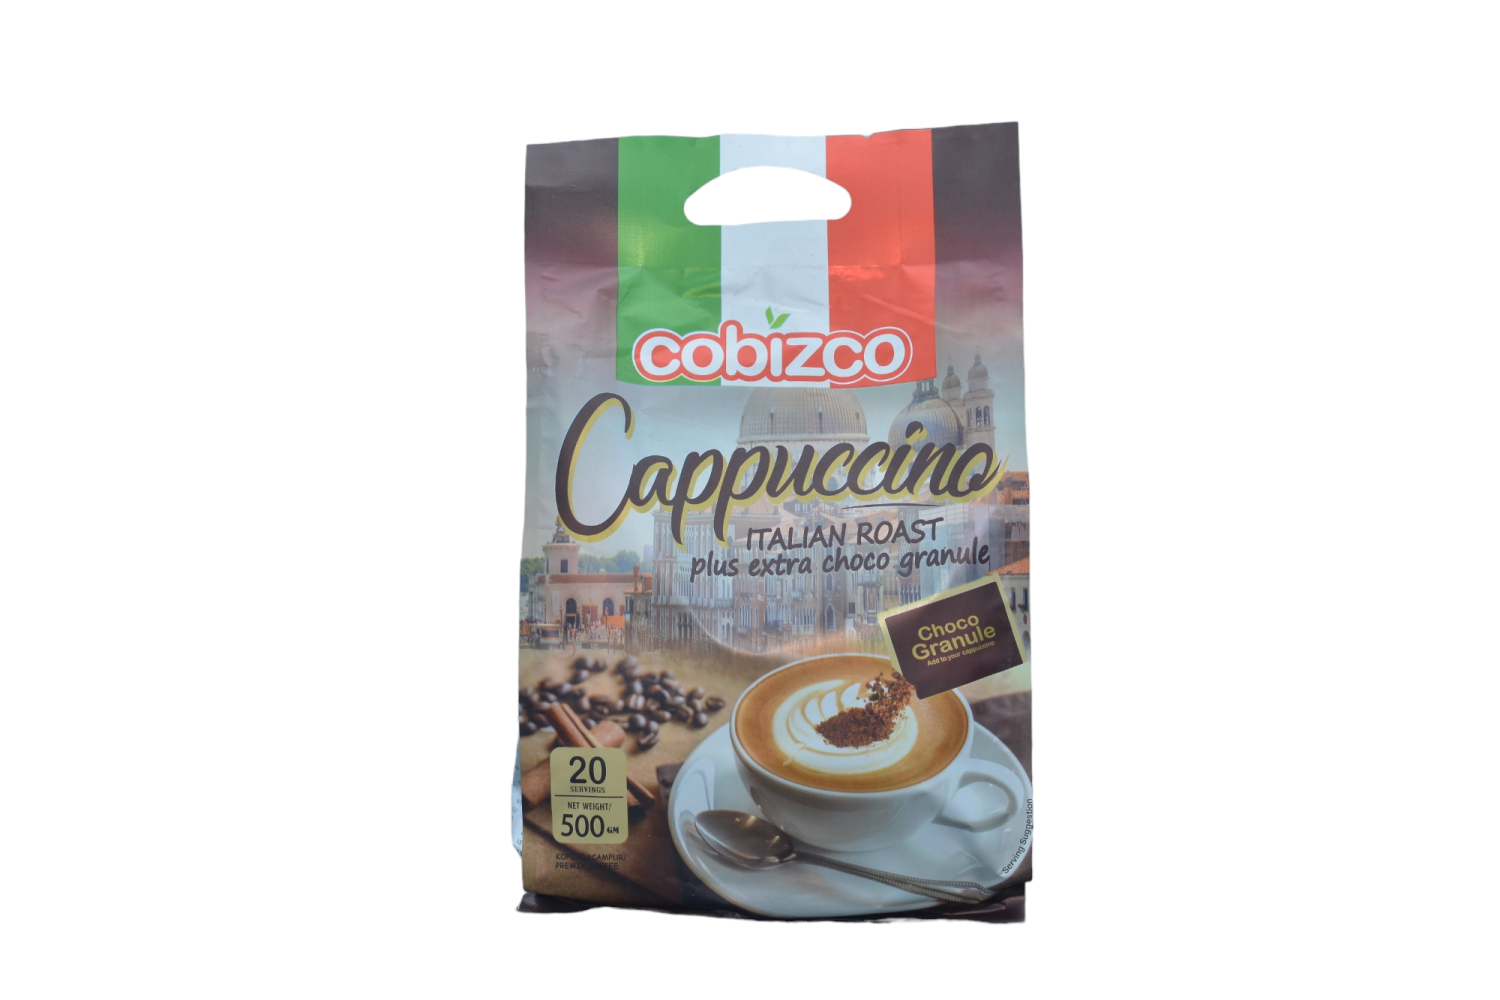 Cobizco Cappuccino + Choco Granule